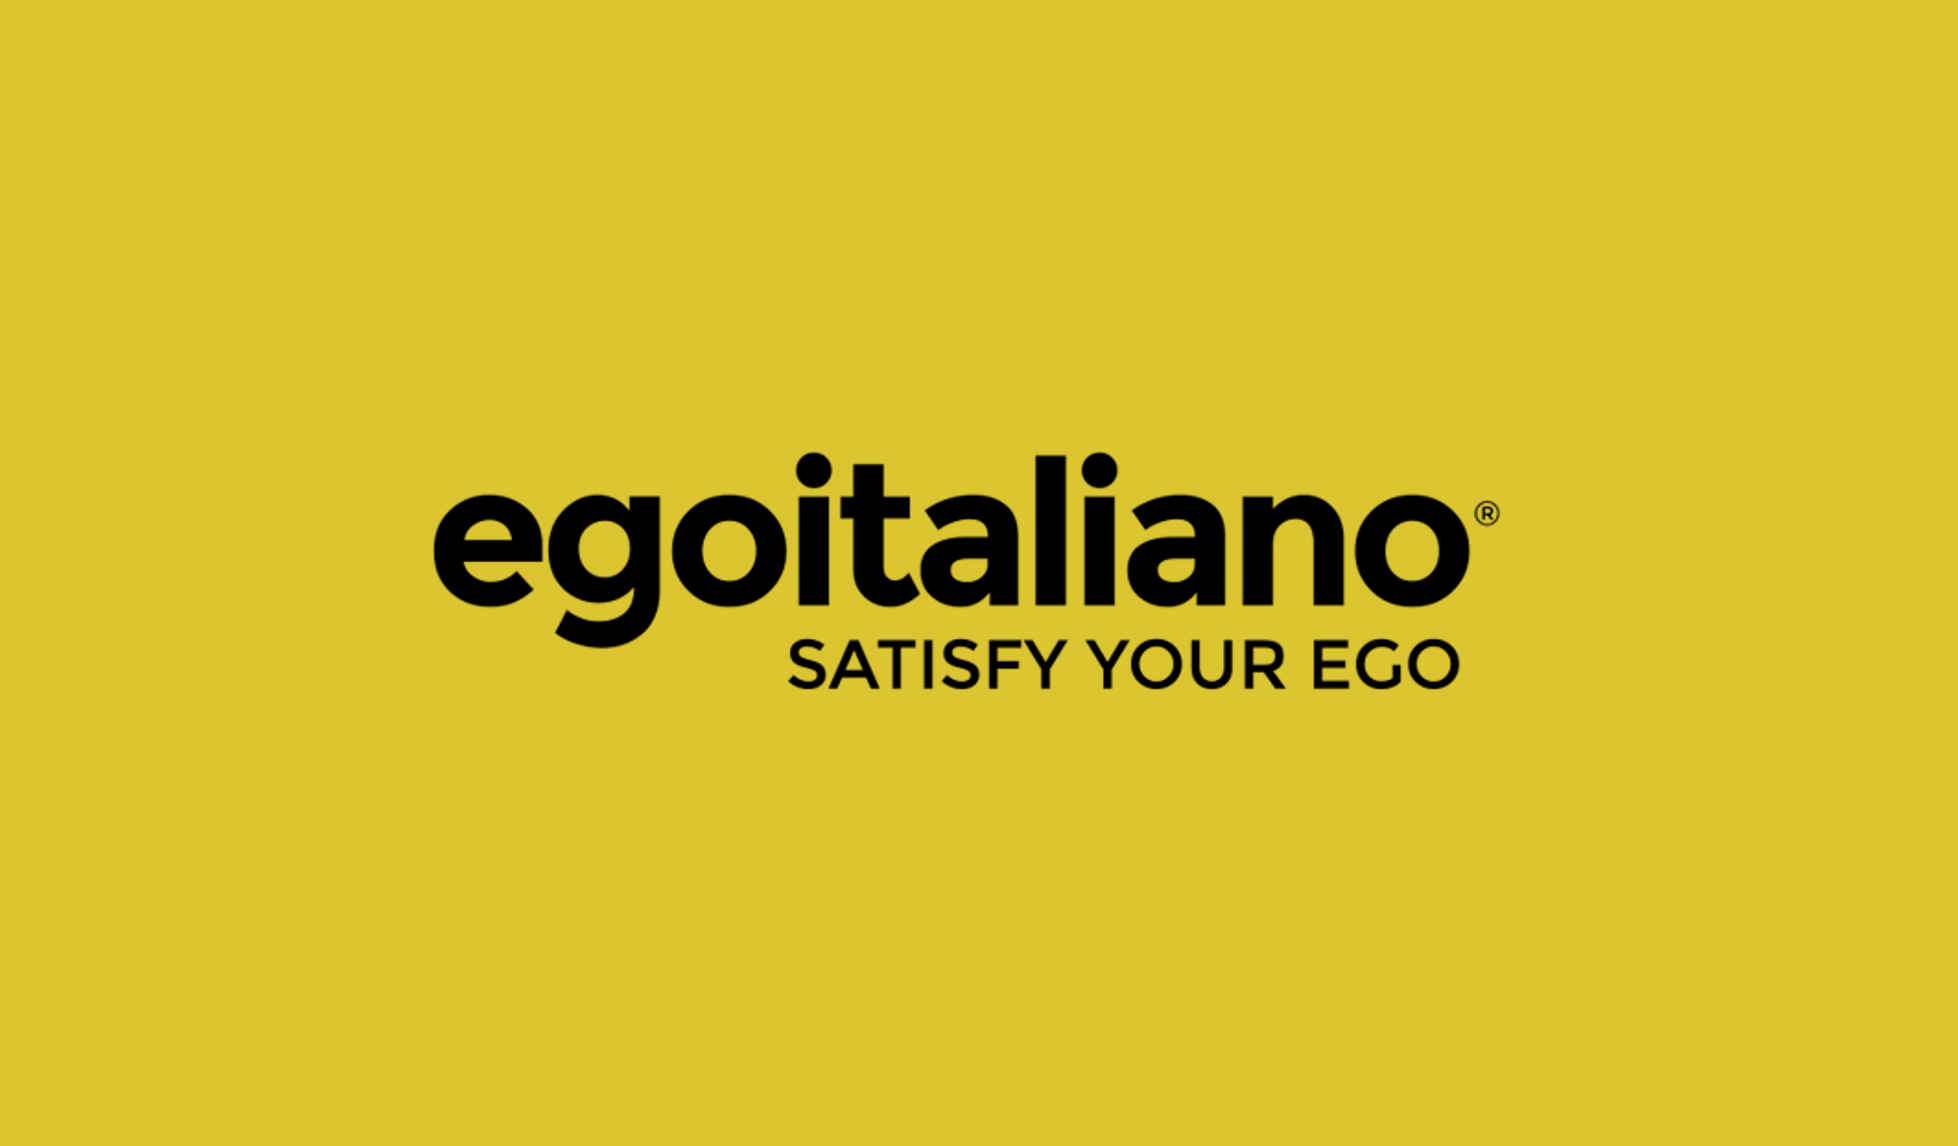 (c) Egoitaliano.com